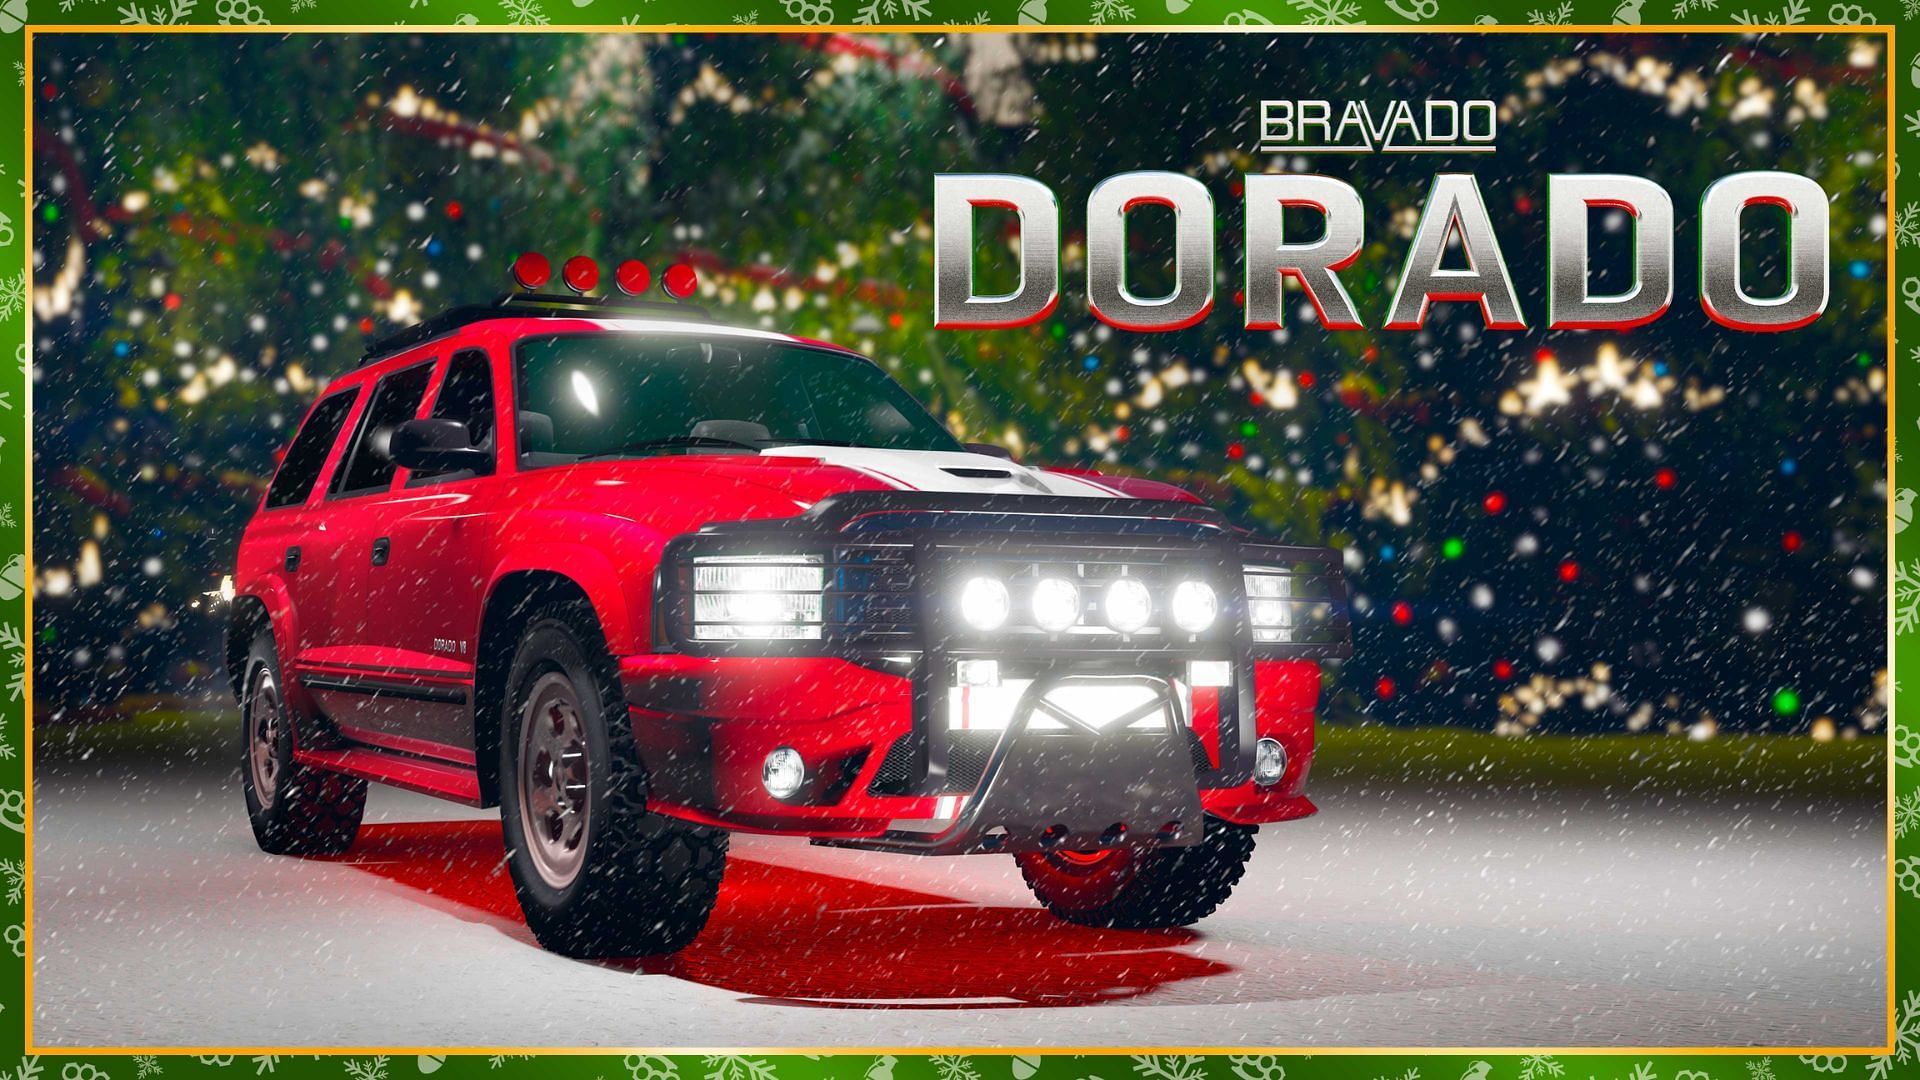 A brief report on the Bravado Dorado in GTA Online including its price, performance, and more (Image via Rockstar Games)  